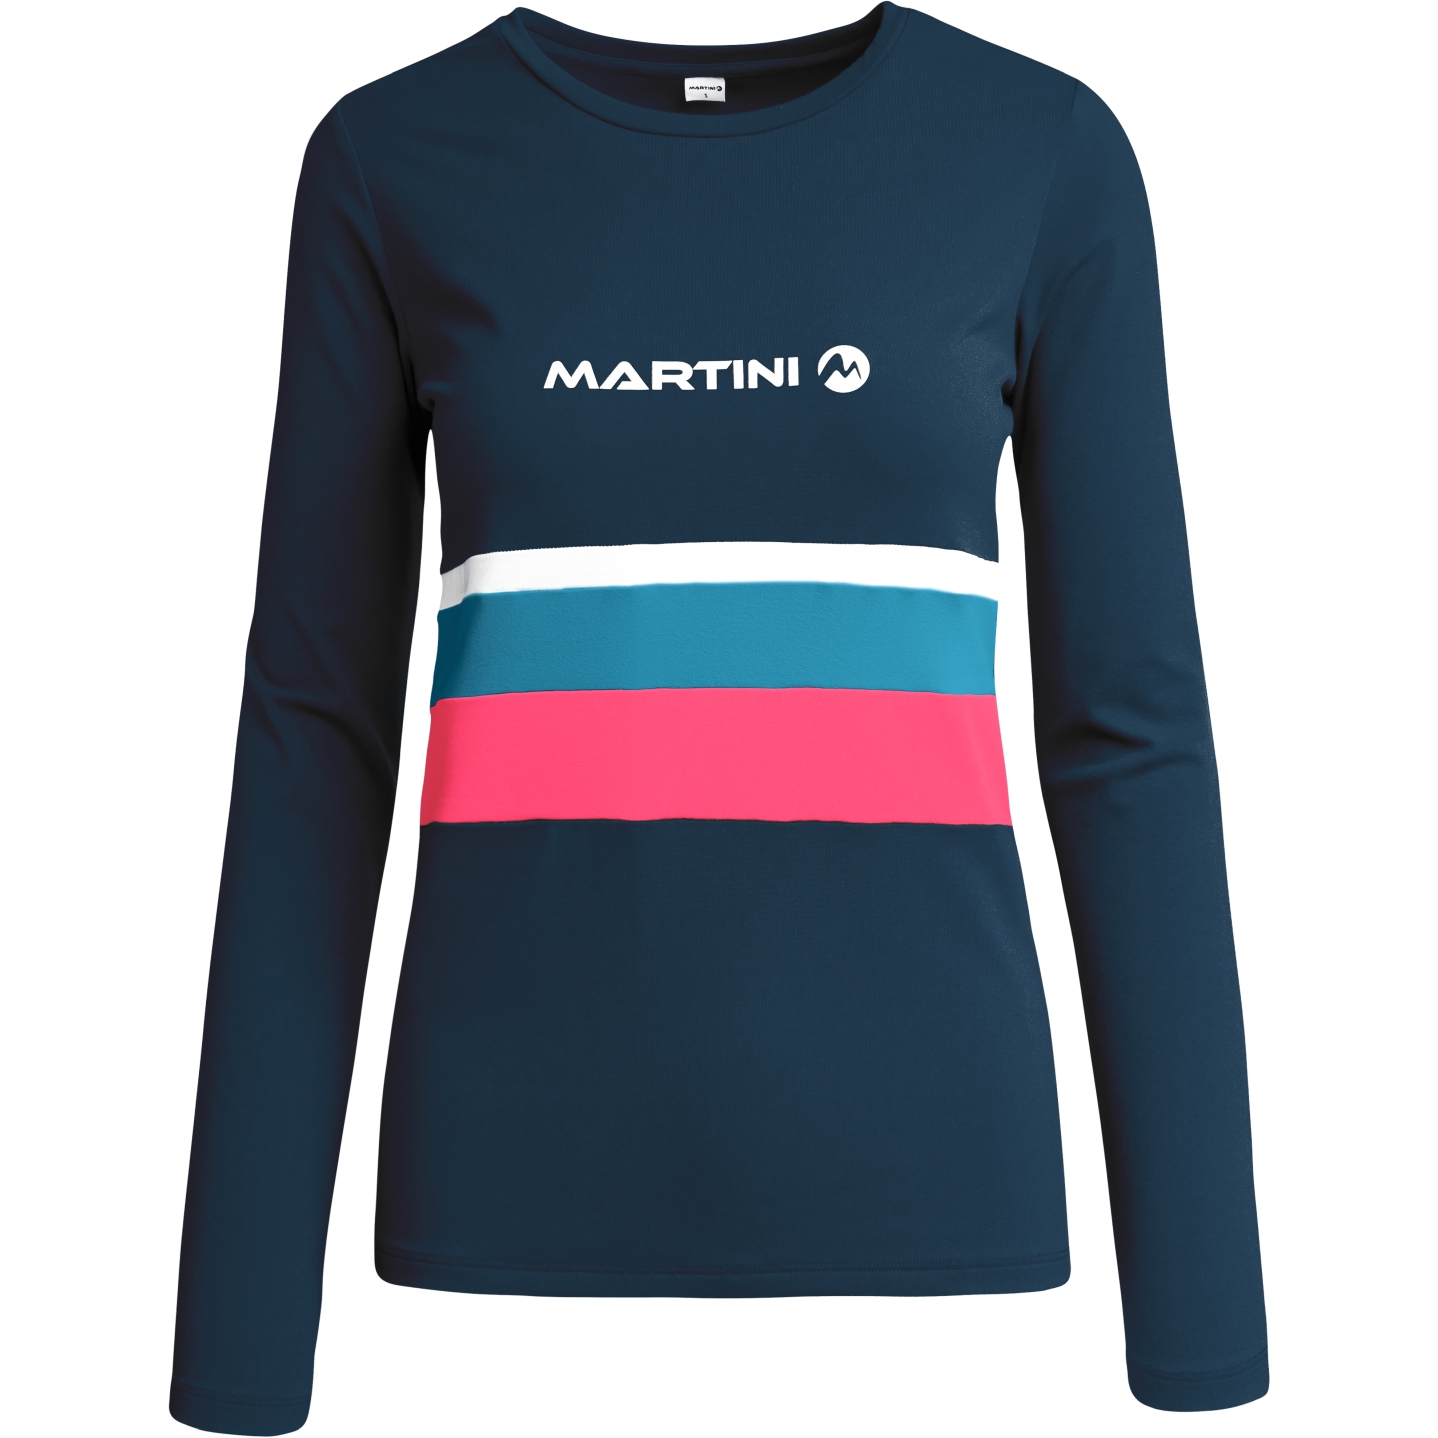 Image of Martini Sportswear Identify Women's Long Sleeve Shirt - iris/candy/indigo